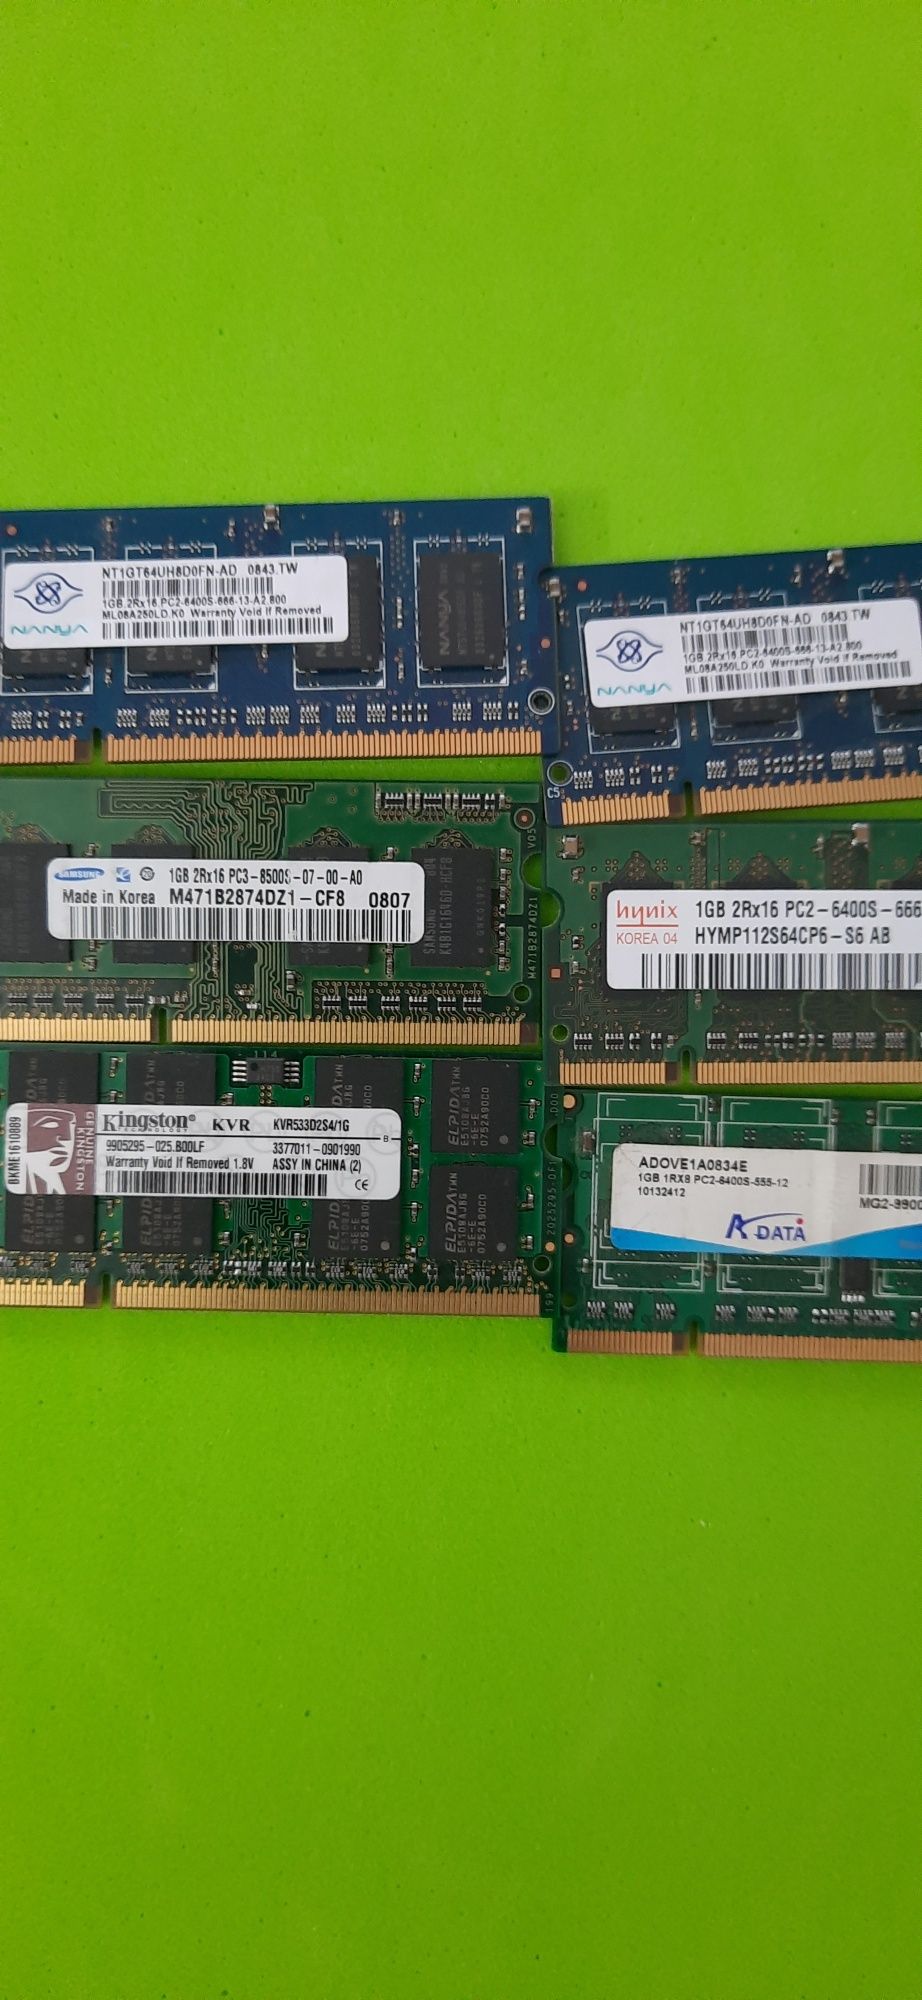 Memorias/Rams SO-DIMM de 1Gb DDR2/DDR3 P/PORTATIL - Unid.